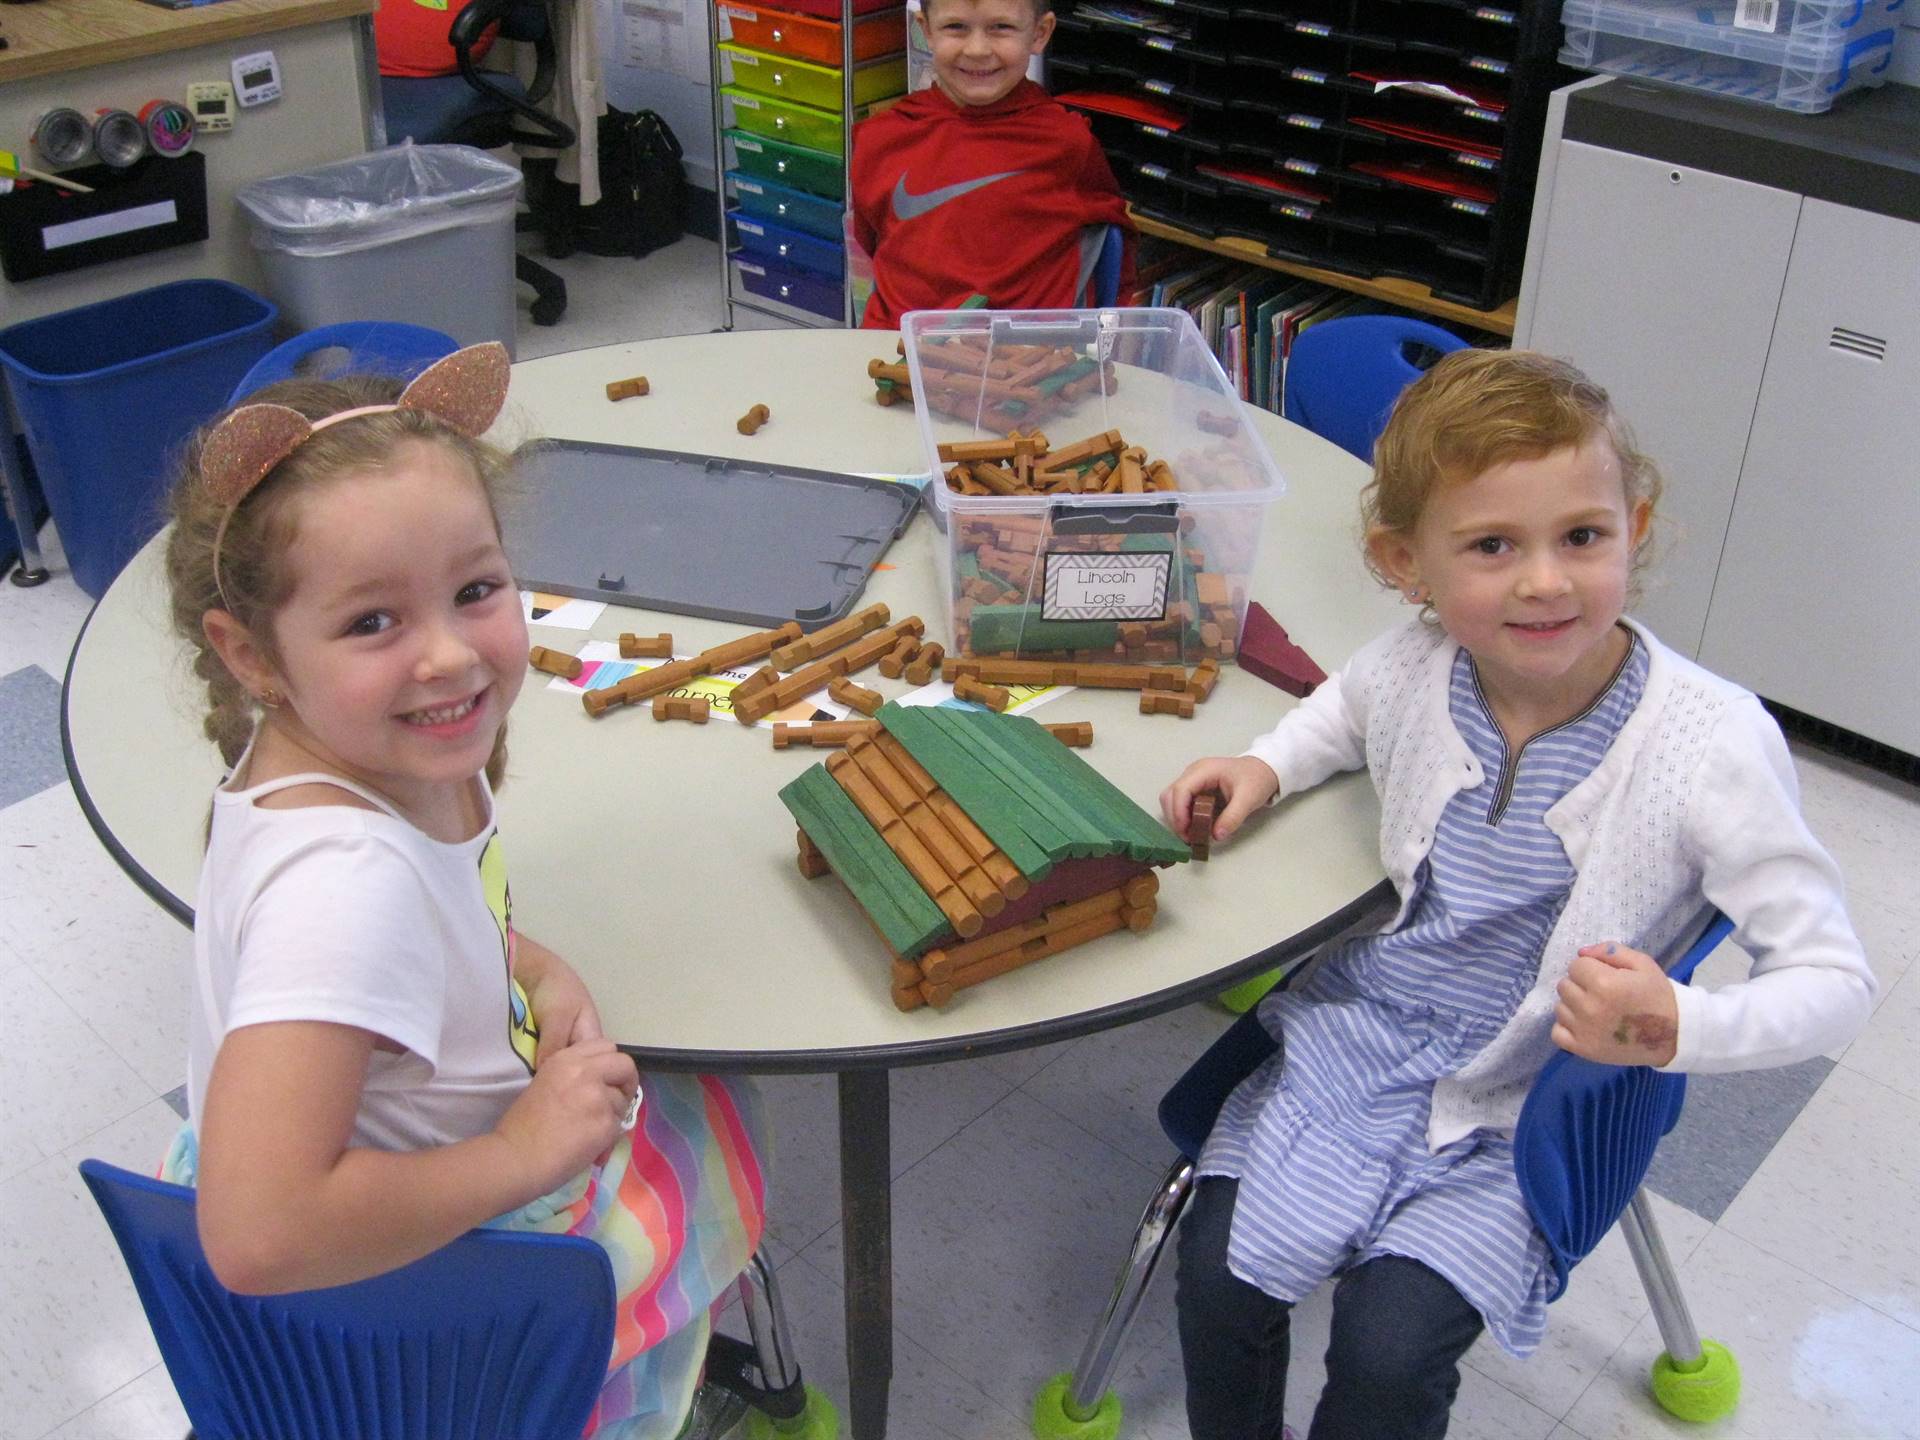 2 Students build together.